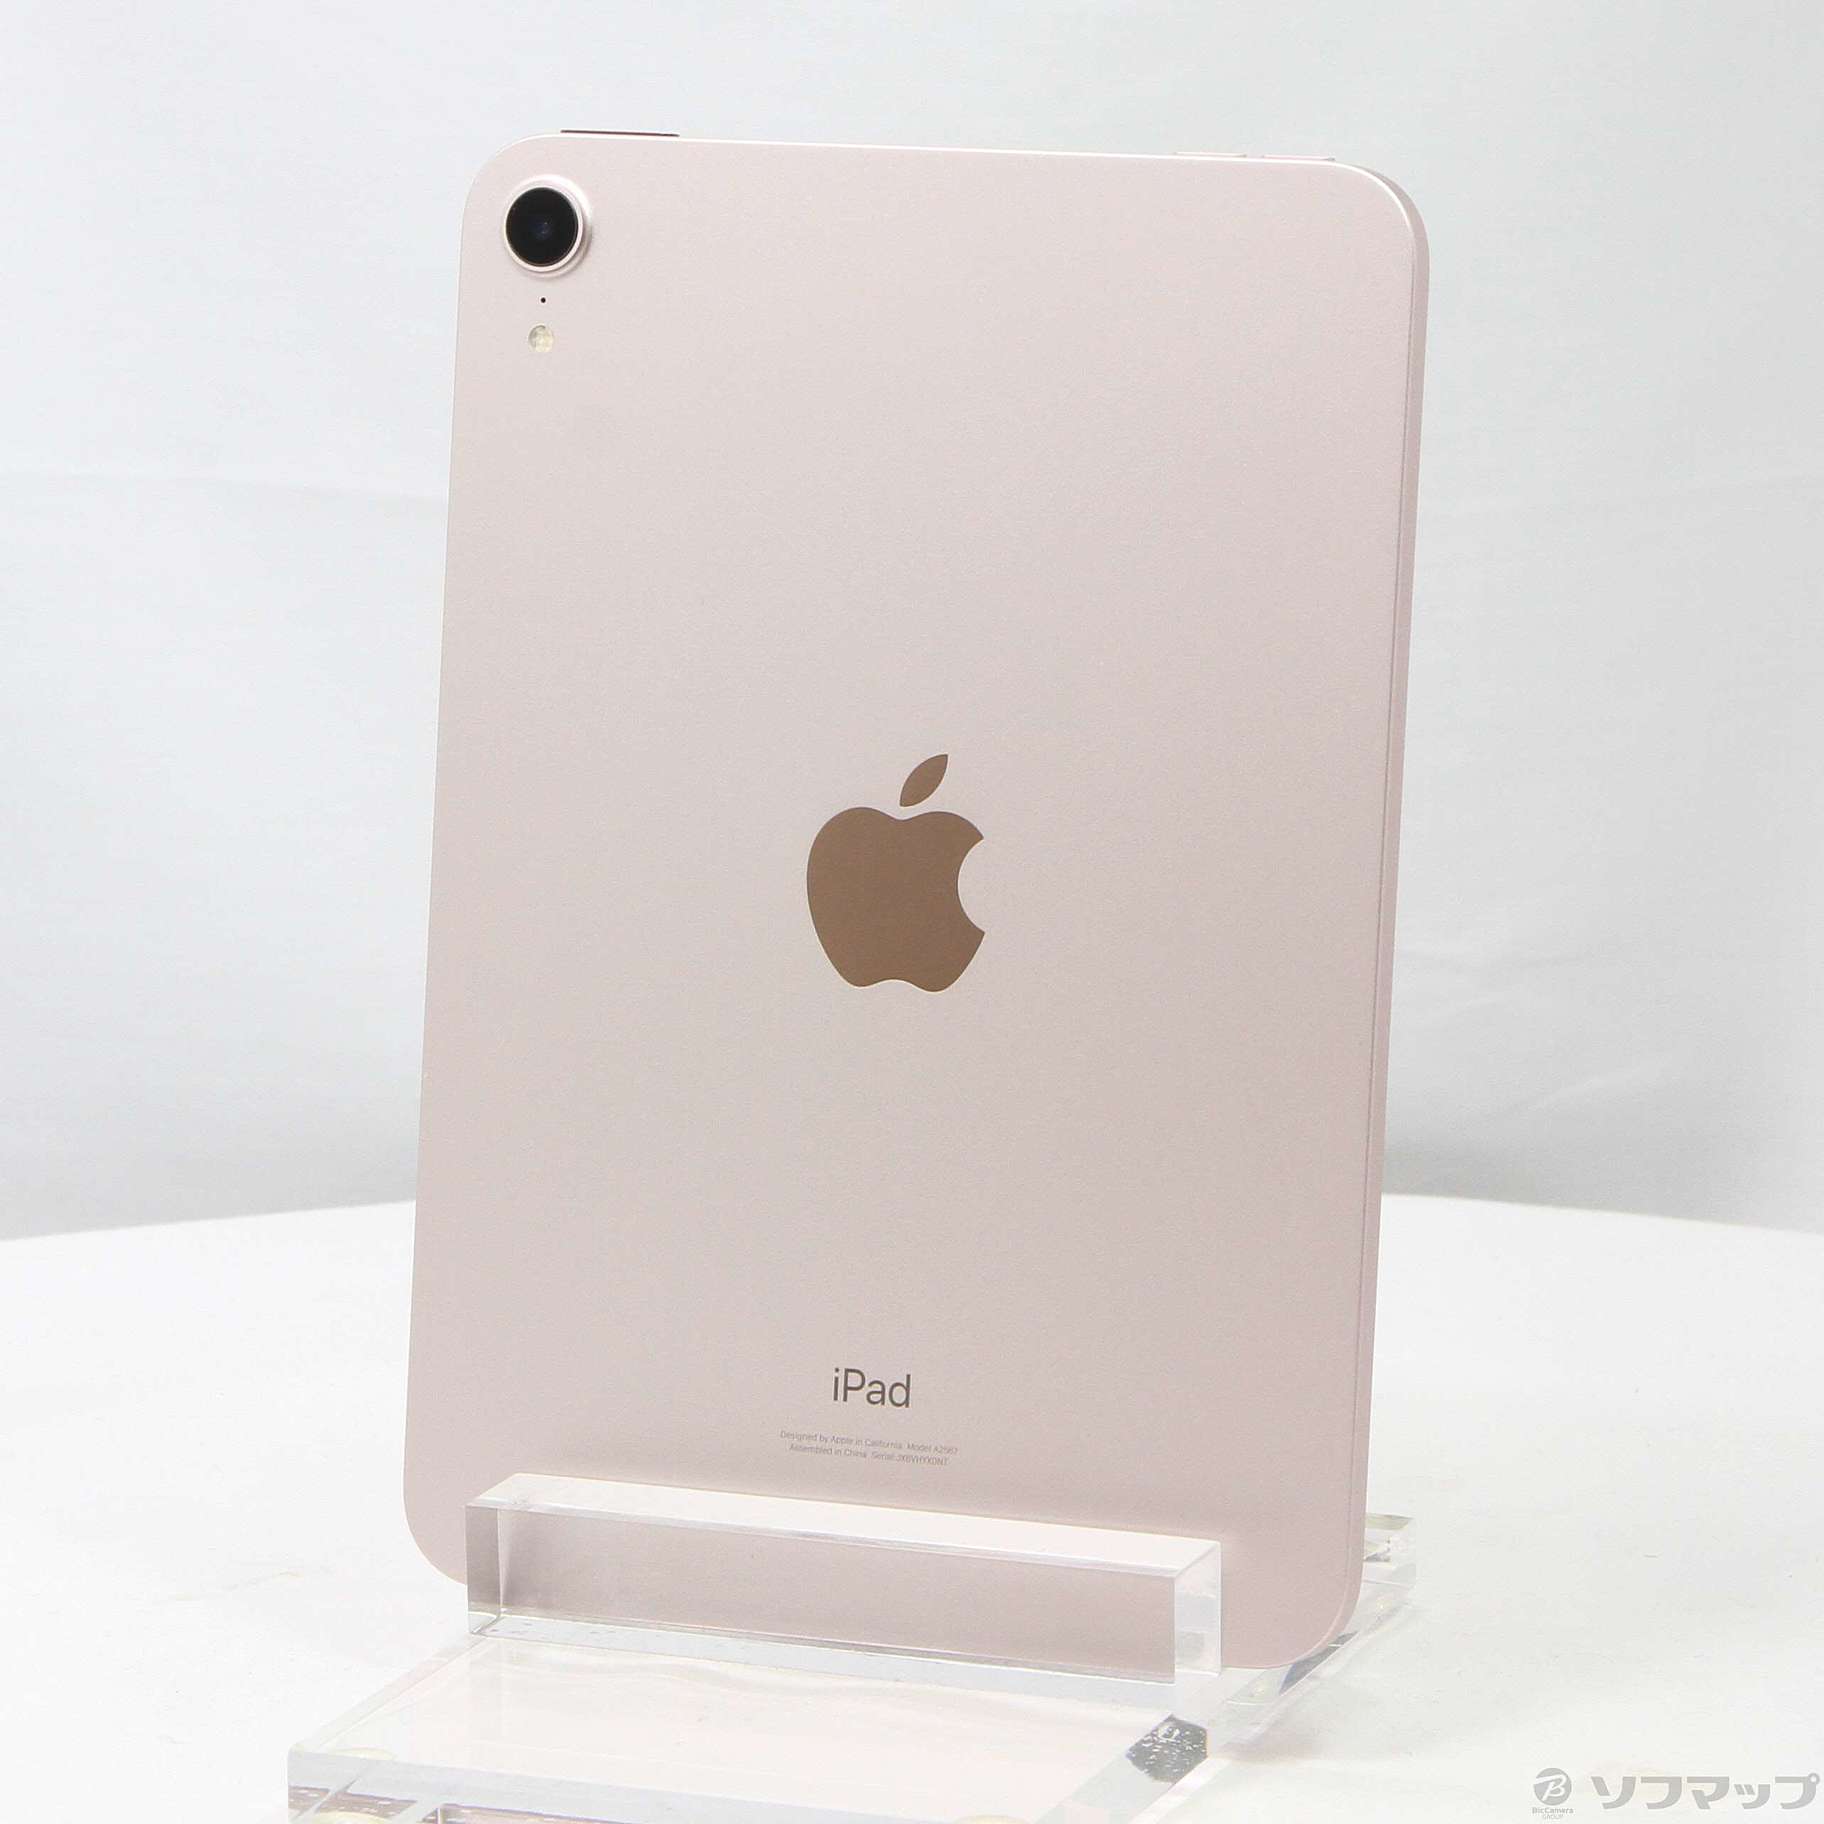 Apple iPad mini 第6世代 ピンク 本体